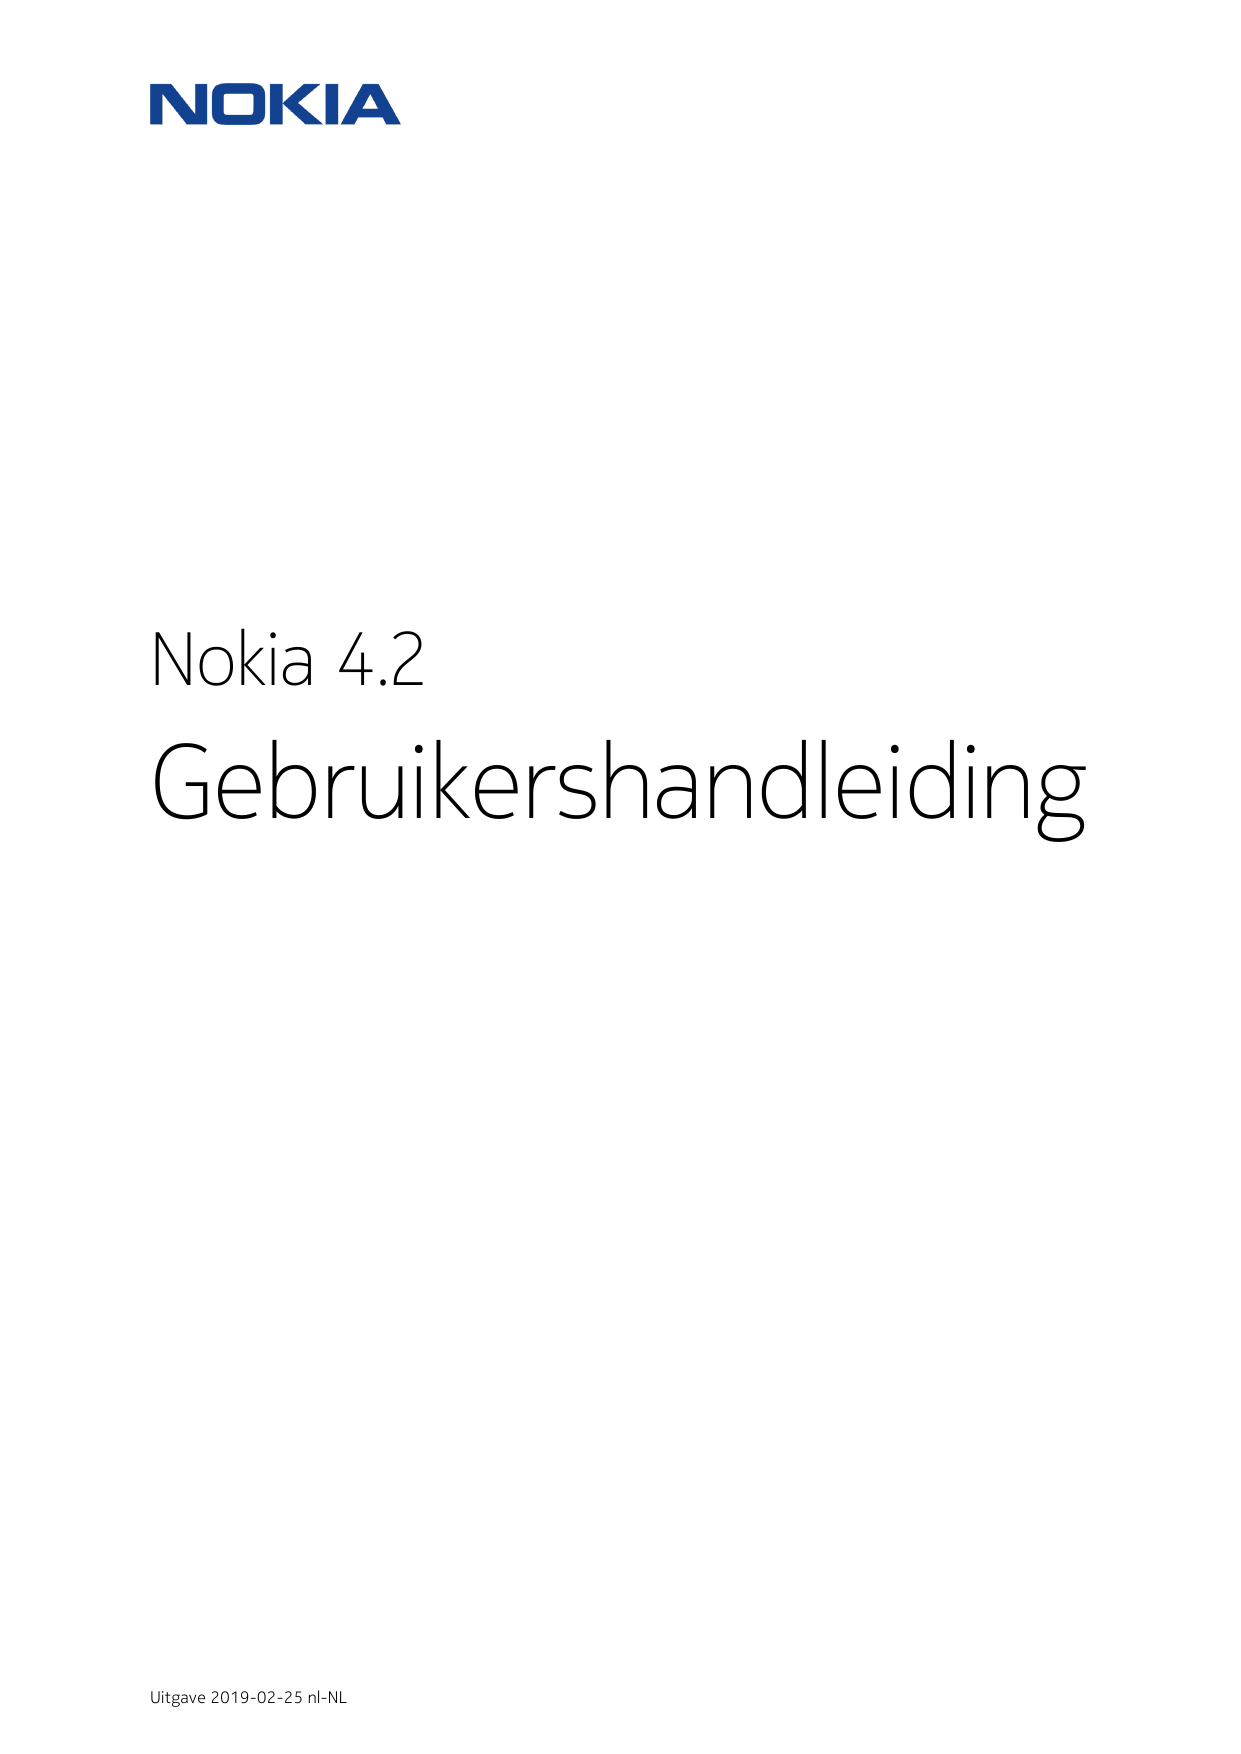 Nokia 4.2GebruikershandleidingUitgave 2019-02-25 nl-NL